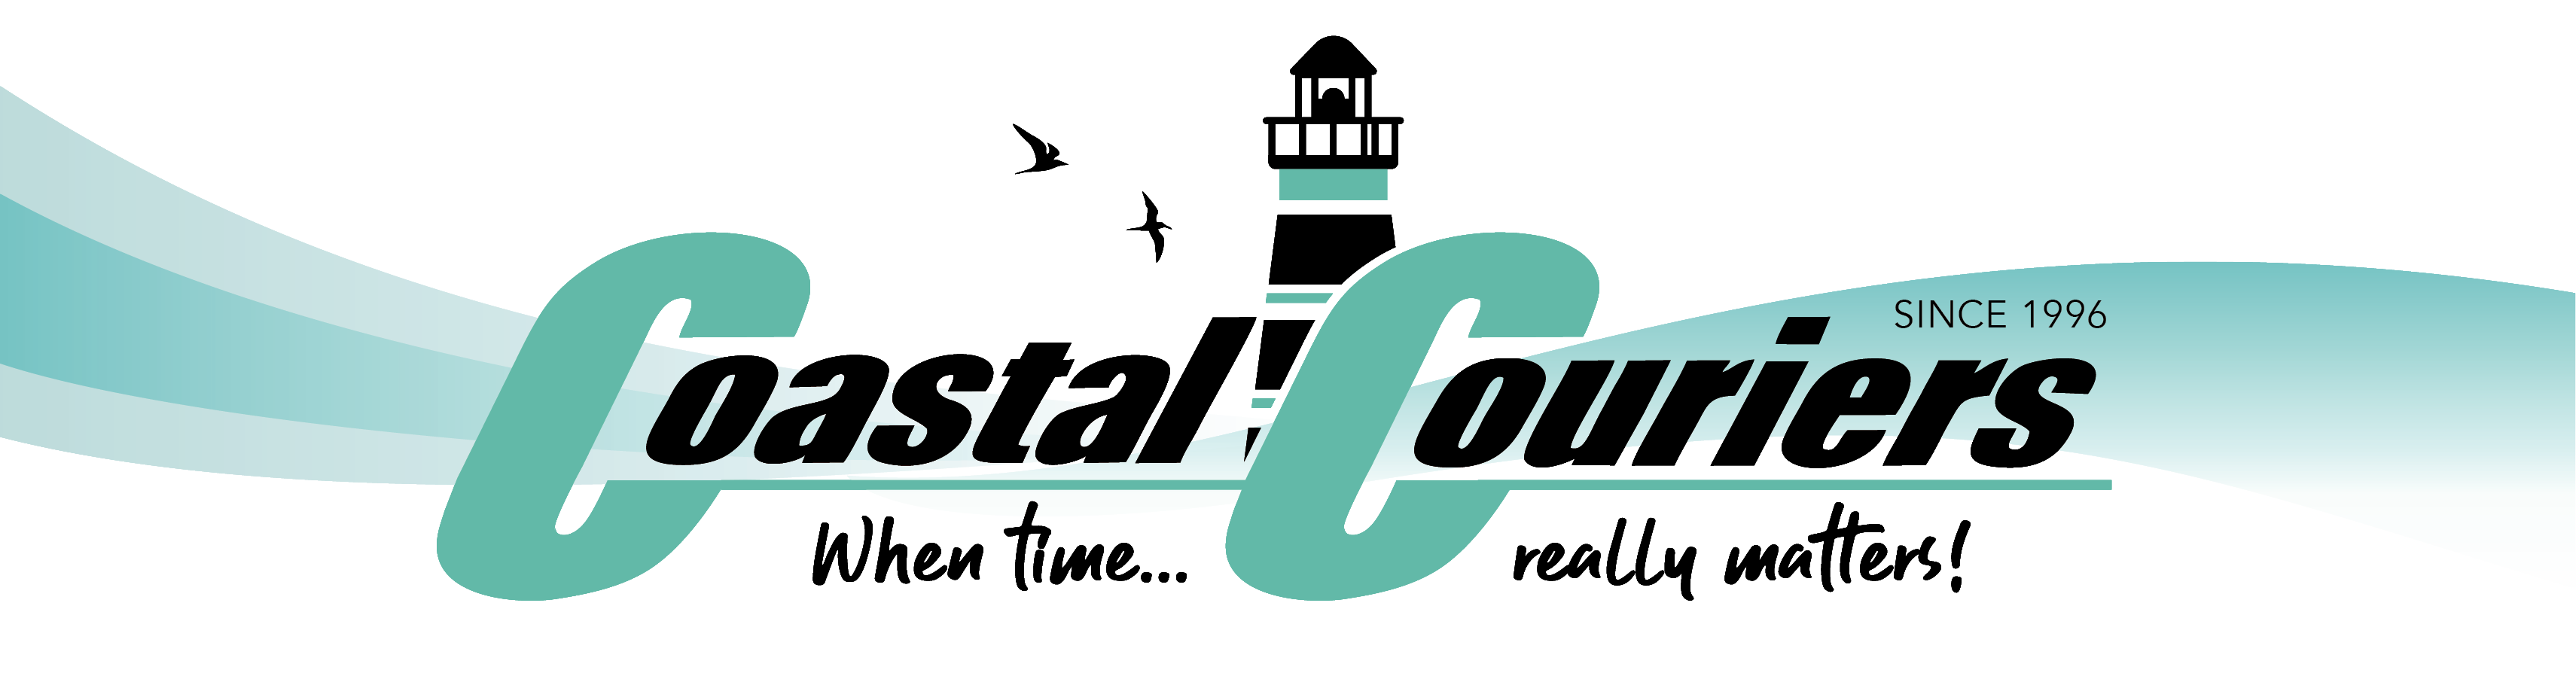 coastal couriers logo